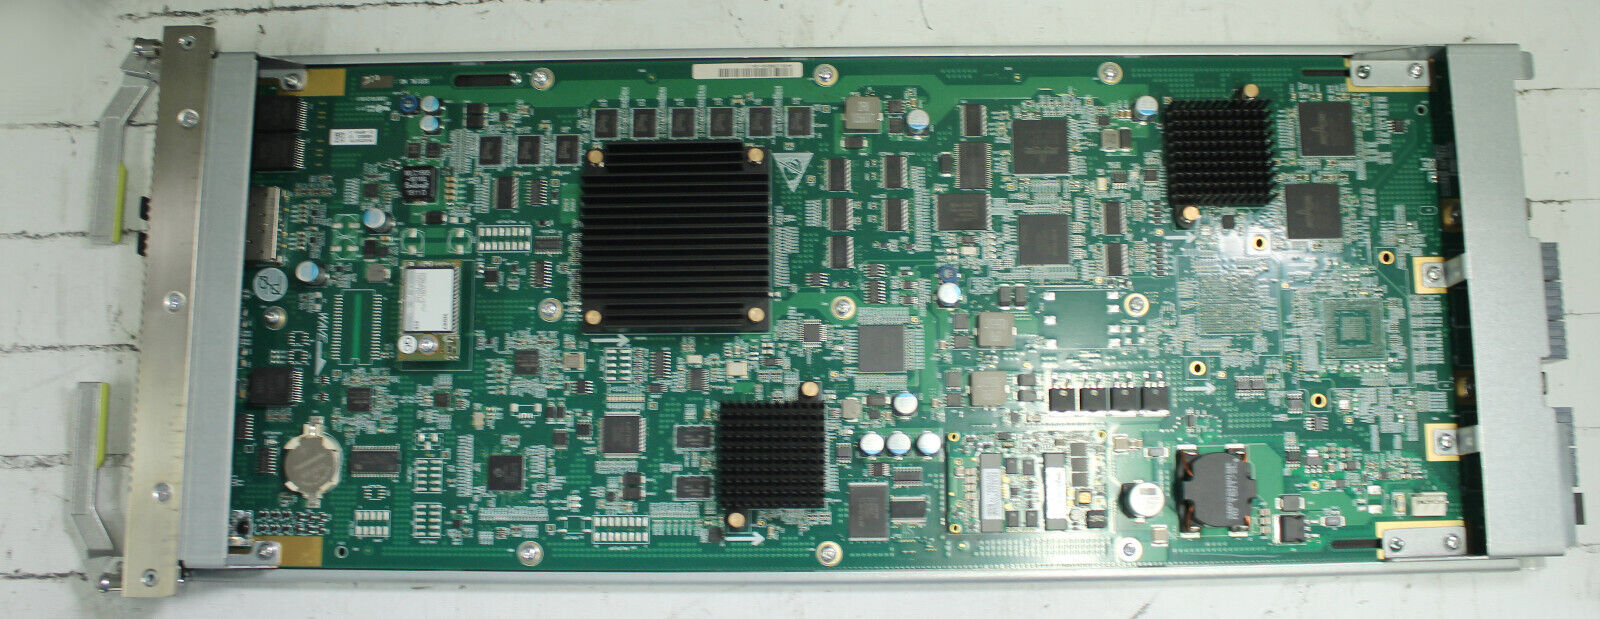 Huawei CE-MPUA-S CE12800 Series Data Center Main Processing Unit